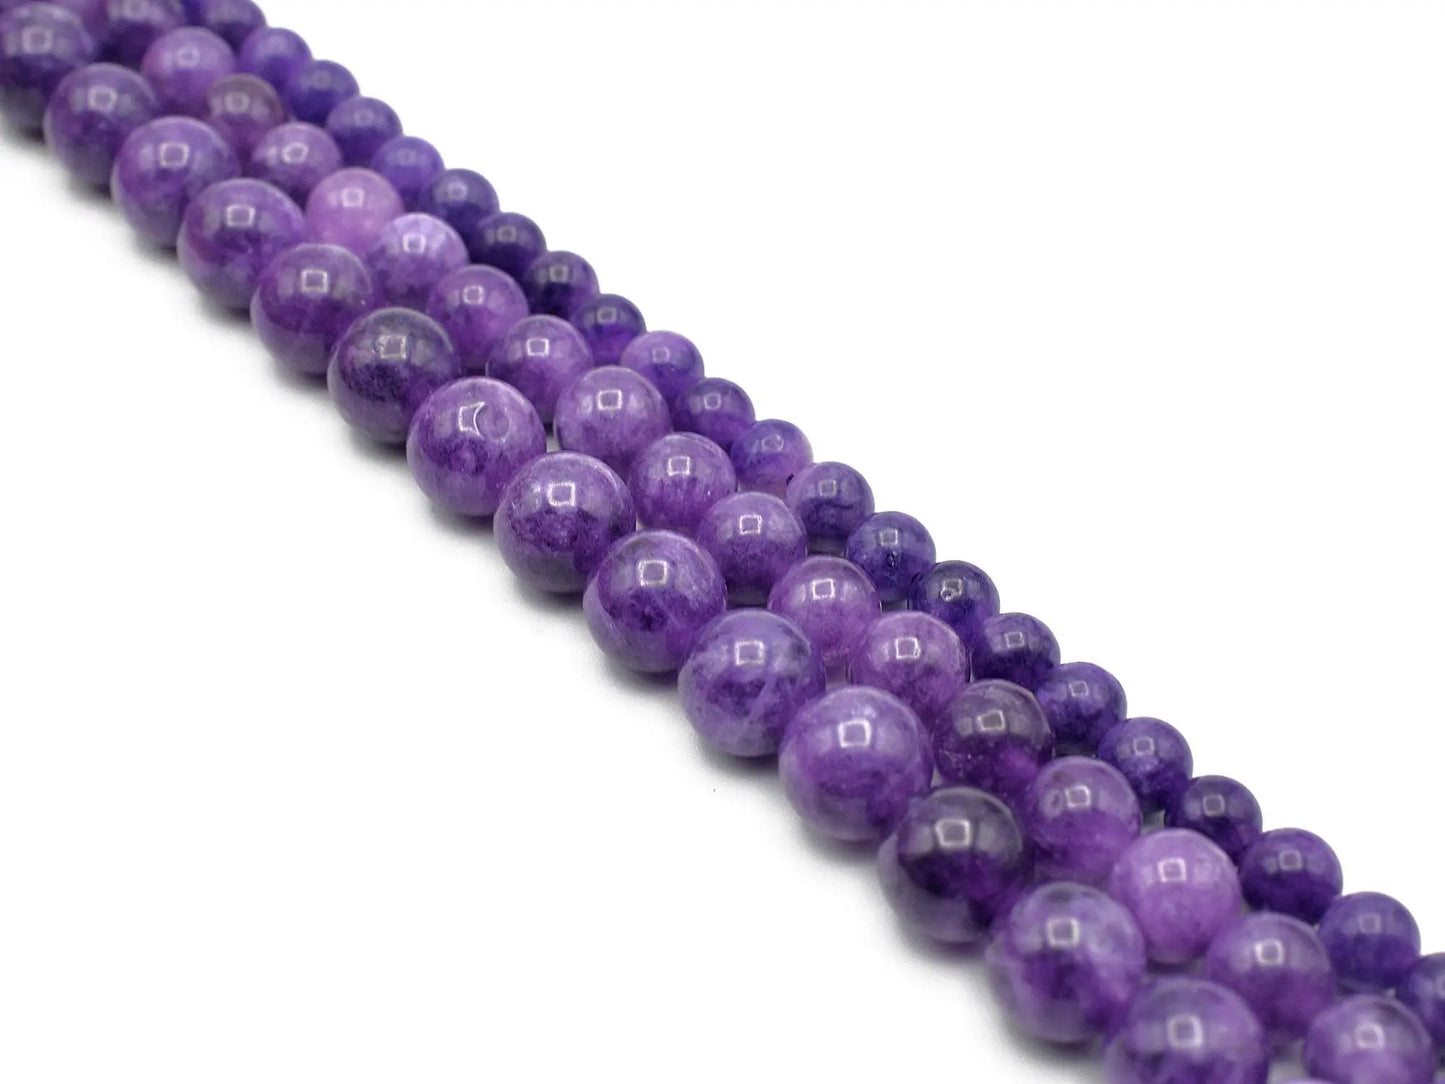 Purple lepidolite stone beads gemstone aaa quality 15" strand round 6mm,8mm,10mm natural stones bead healing chakra stone for jewelry making - BeadsFindingDepot